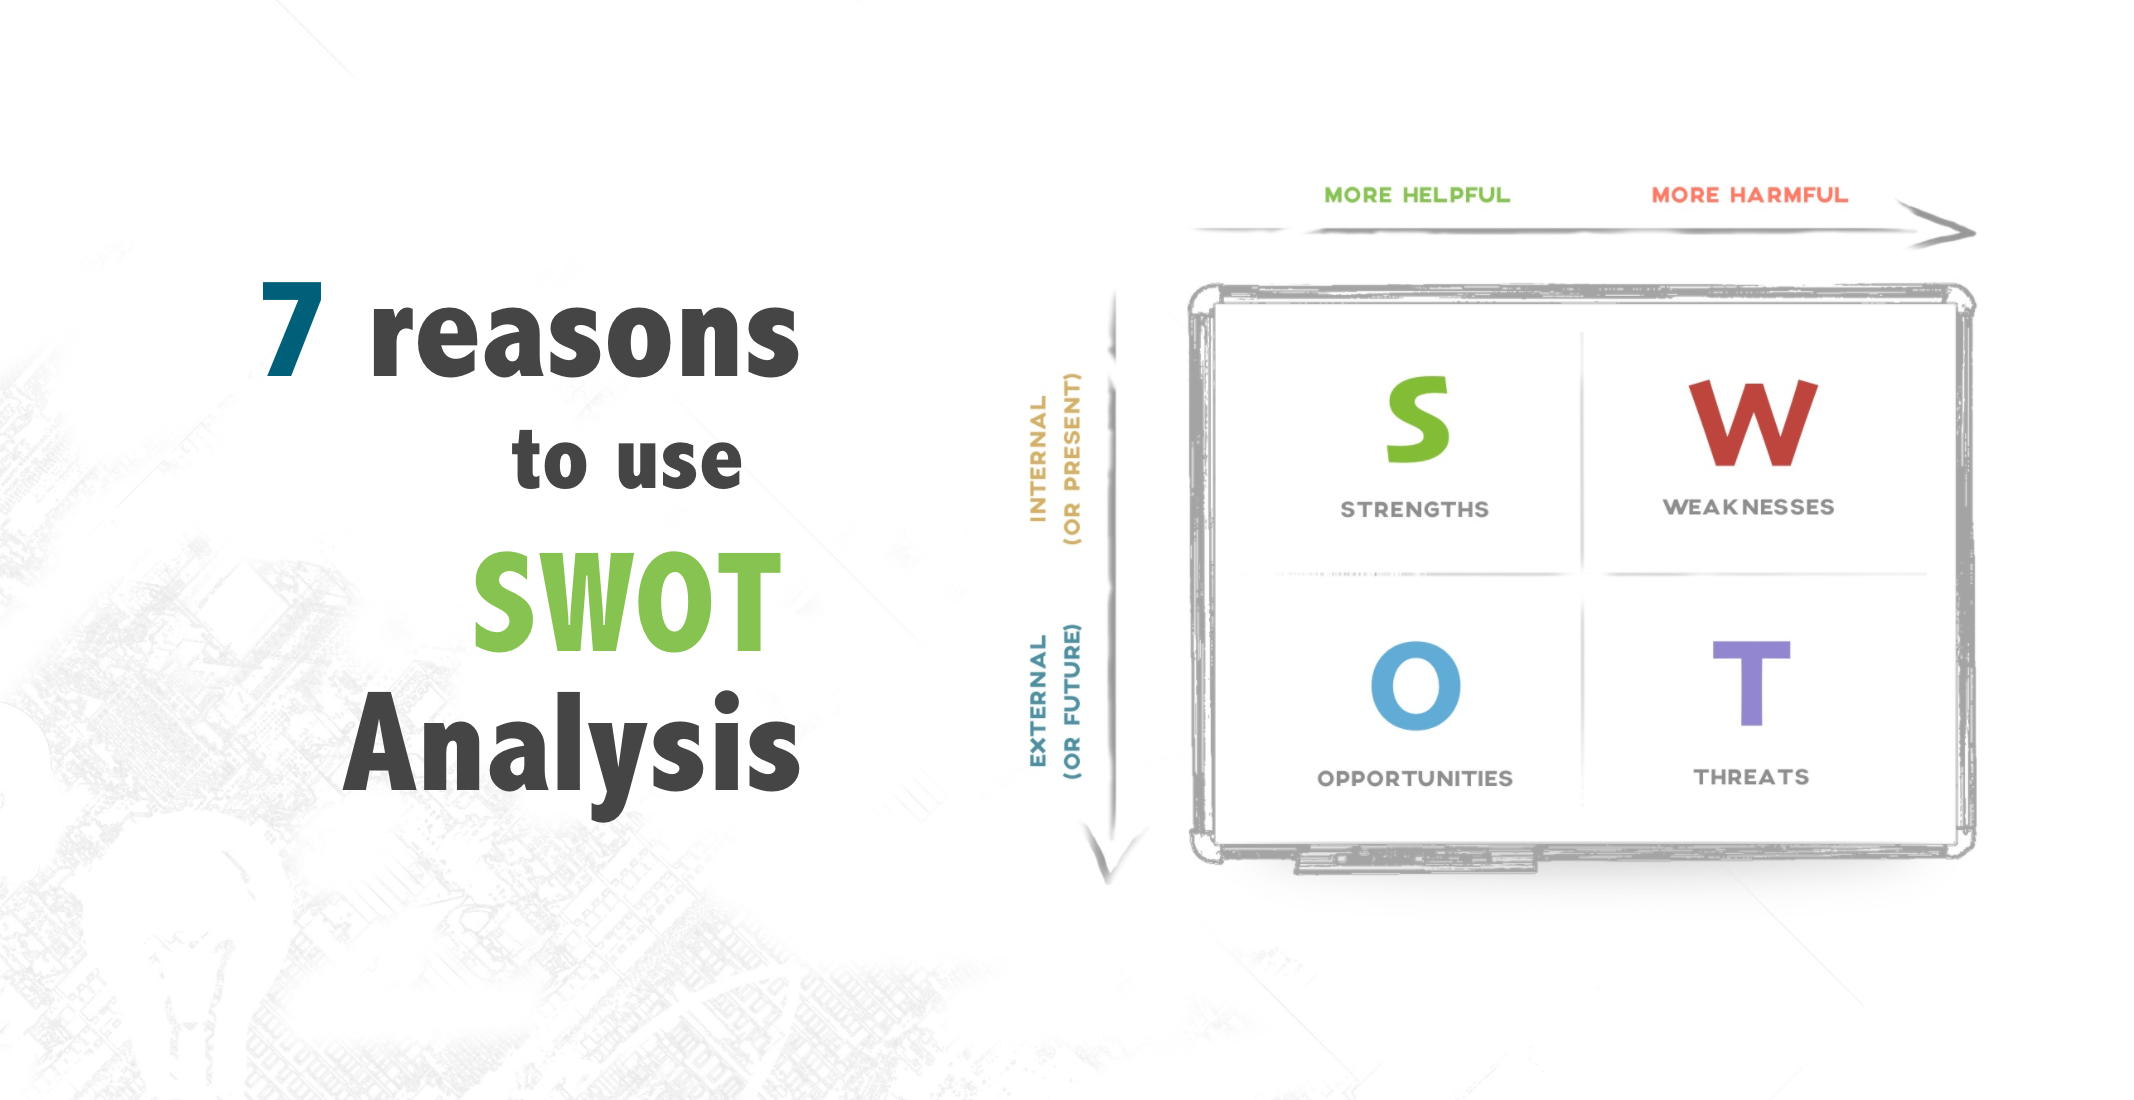 7 reasons to use SWOT analysis